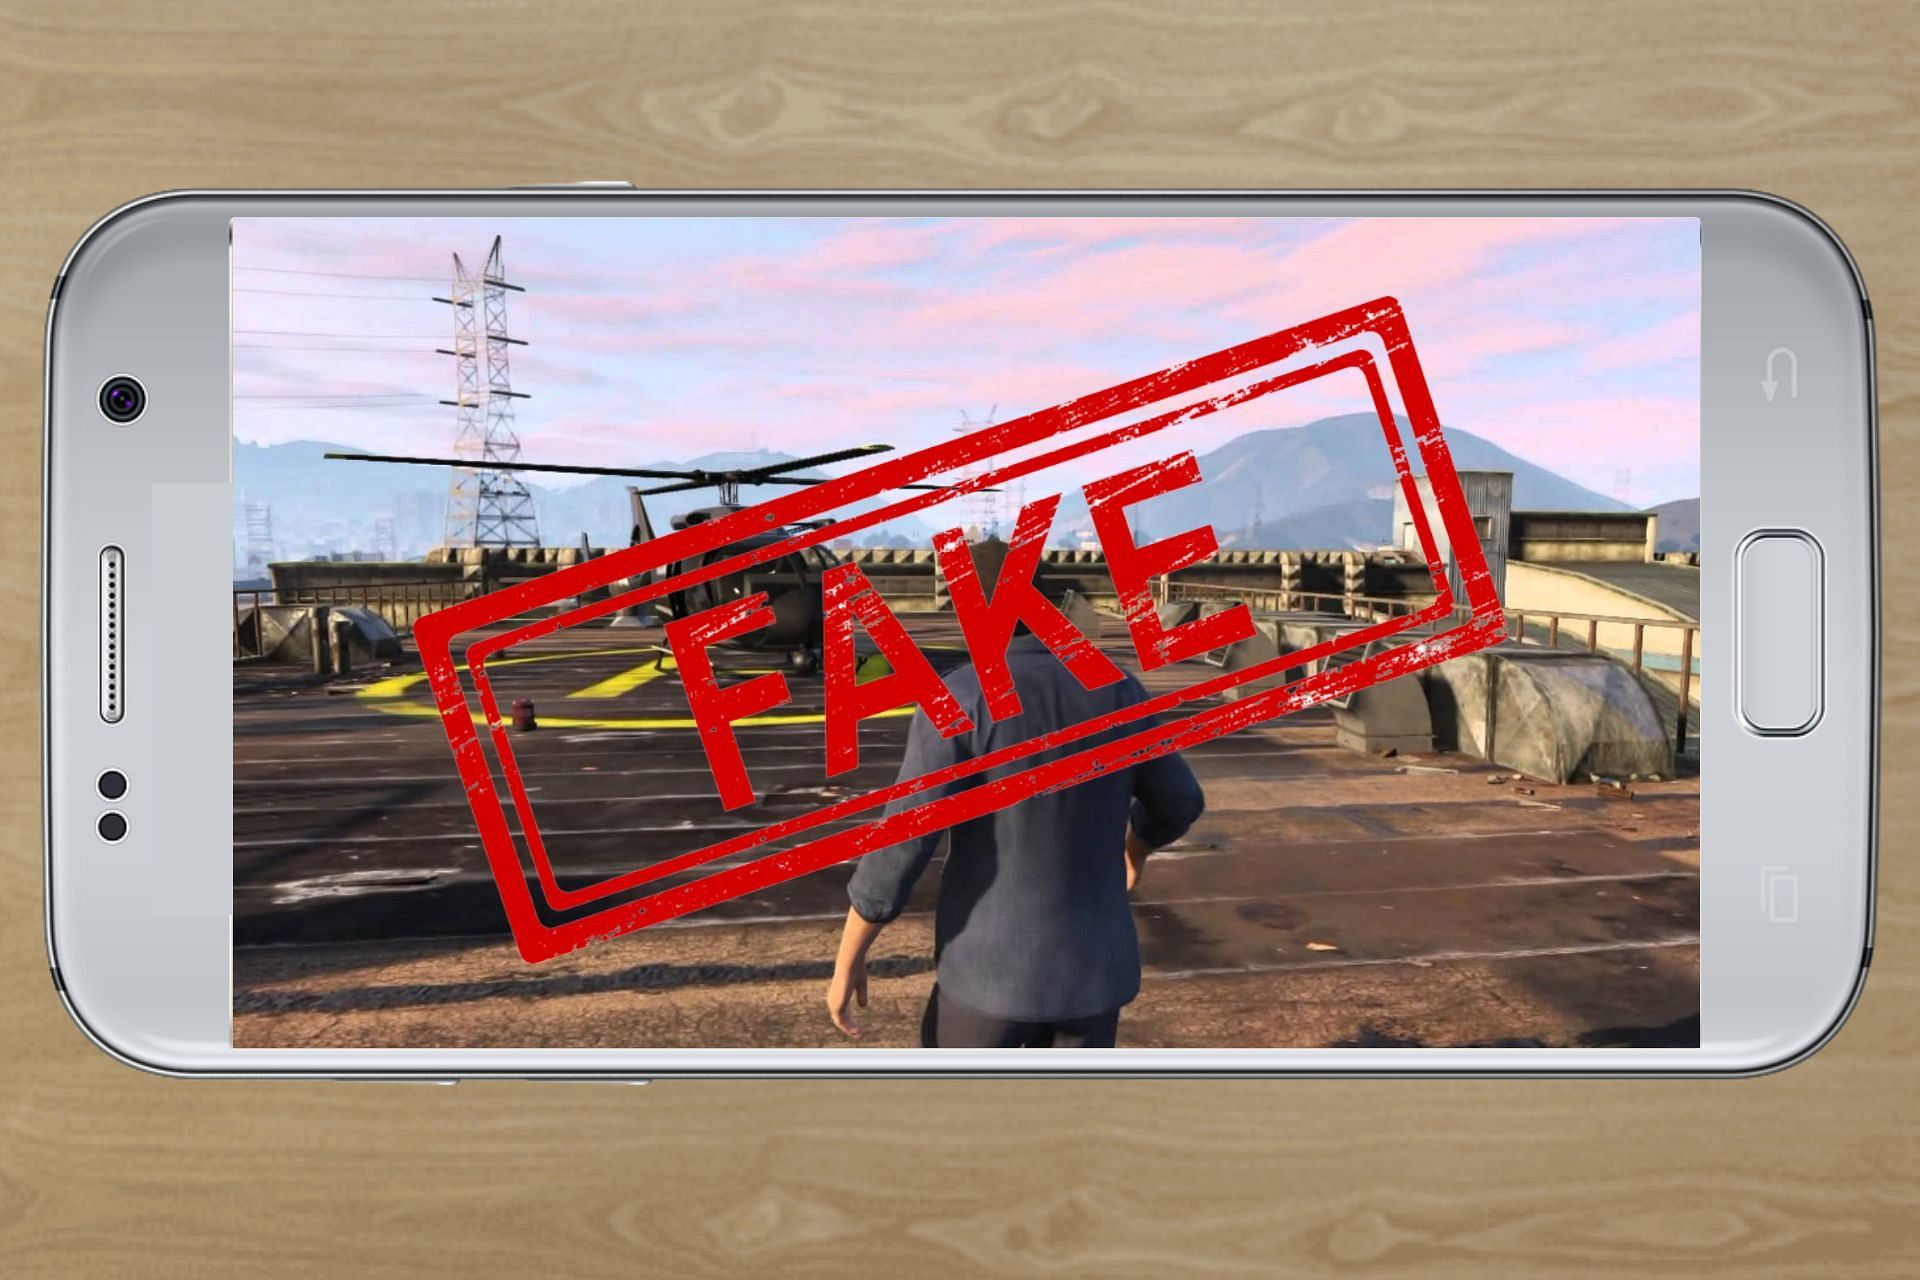 Most GTA 5 APK download links on the internet are fake (Image via Sportskeeda)